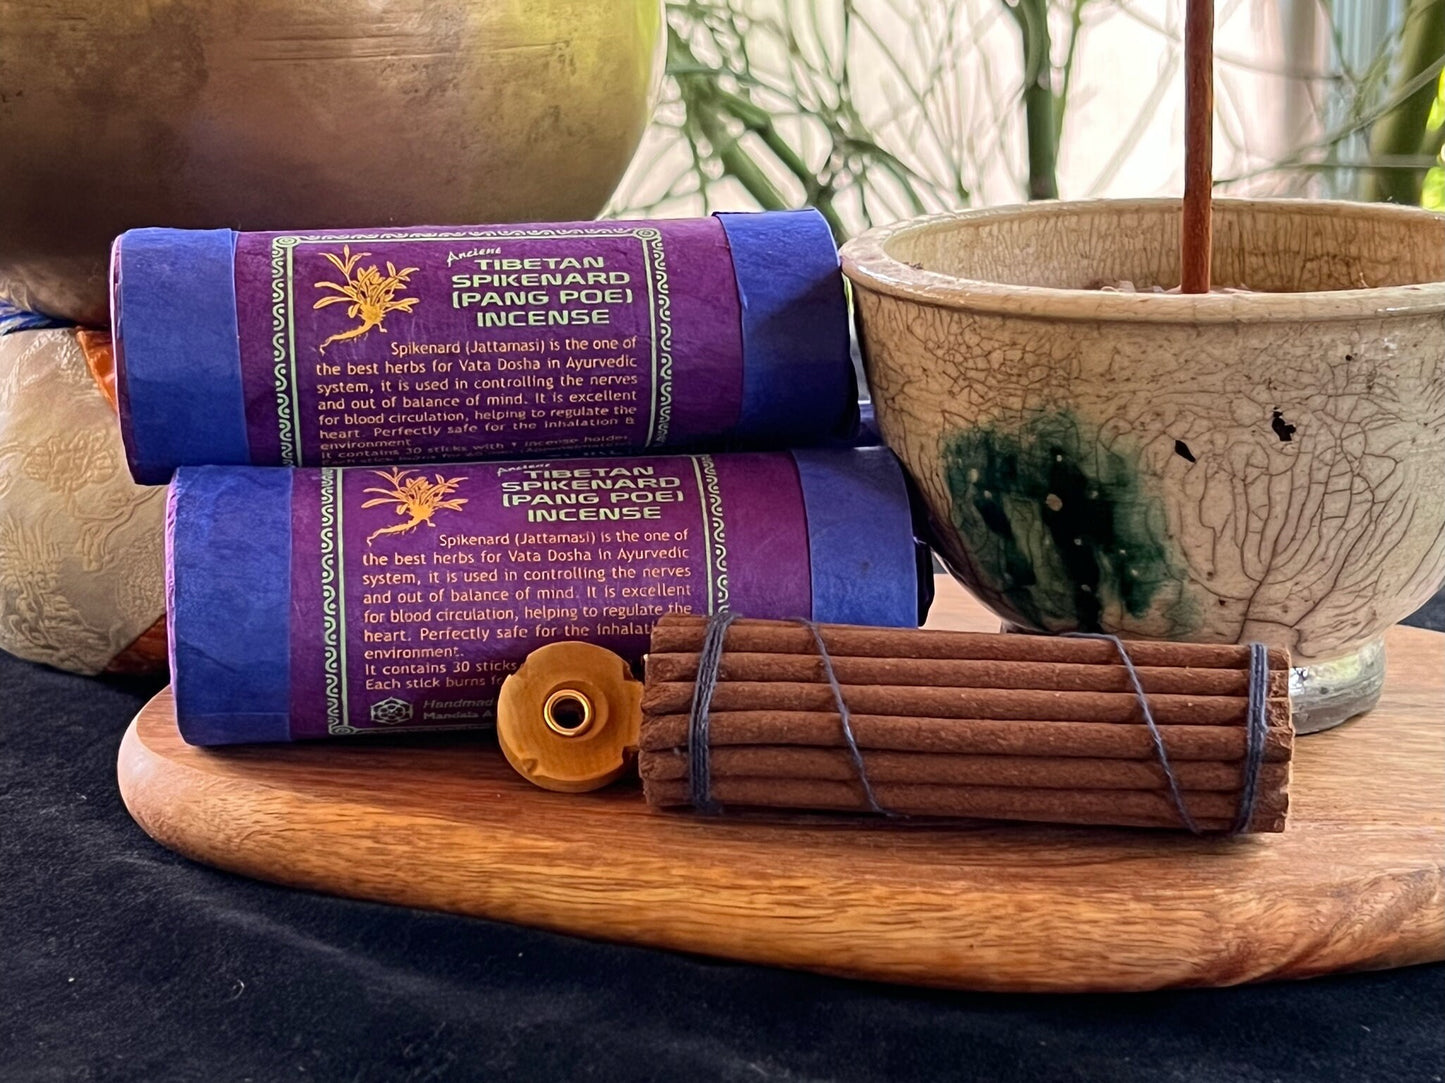 Tibetan Spikenard (Pang Poe) Incense | Tibetan Incense | 30 sticks